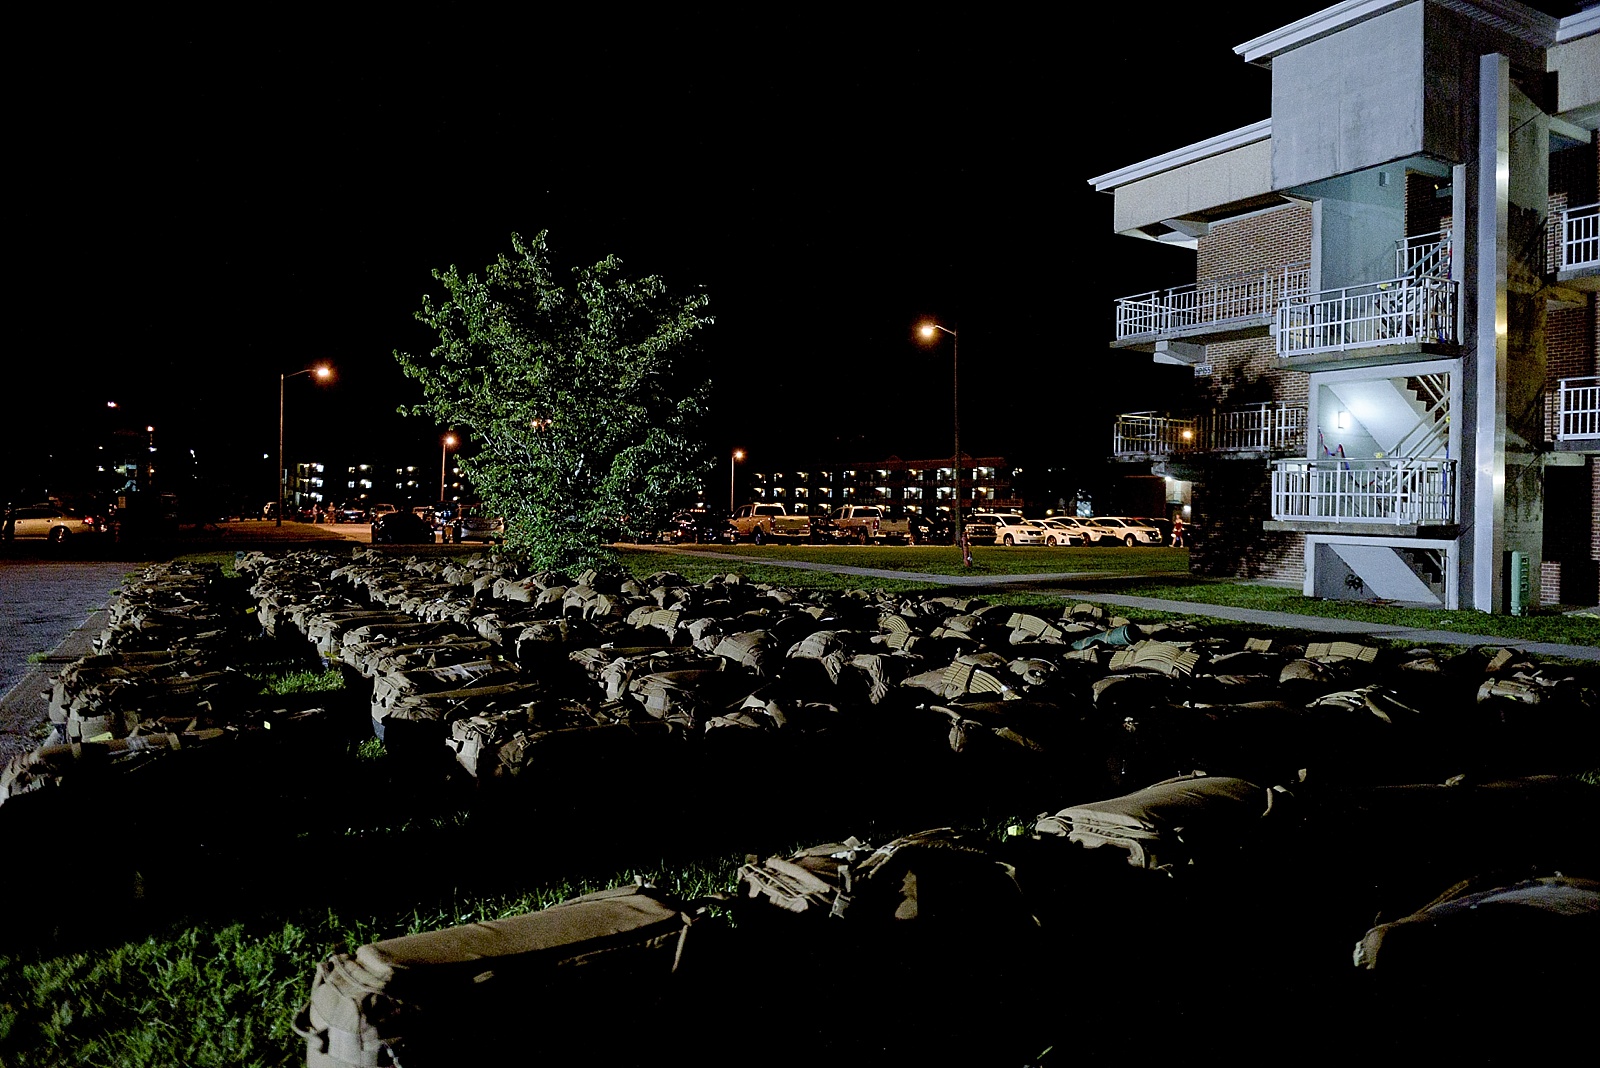 Nighttime Marine Corps homecoming photography at Camp Lejeune from North Carolina portrait photographer Lauren Nygard